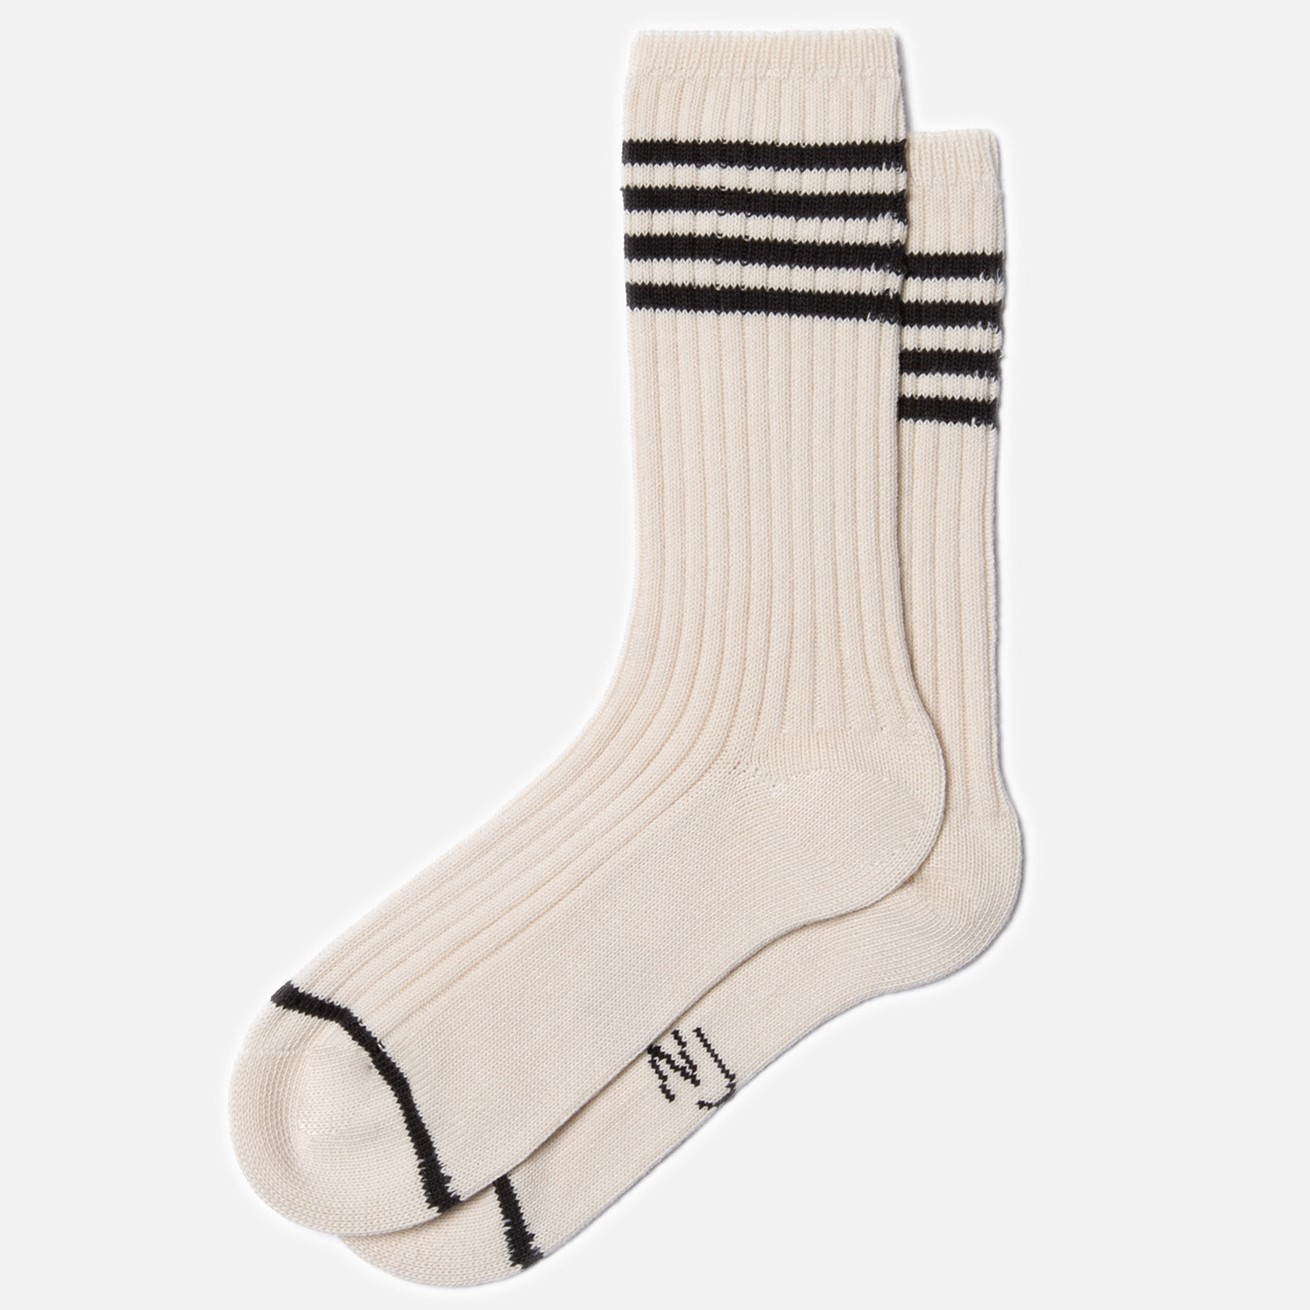 Tennis-Socken Offwhite Black